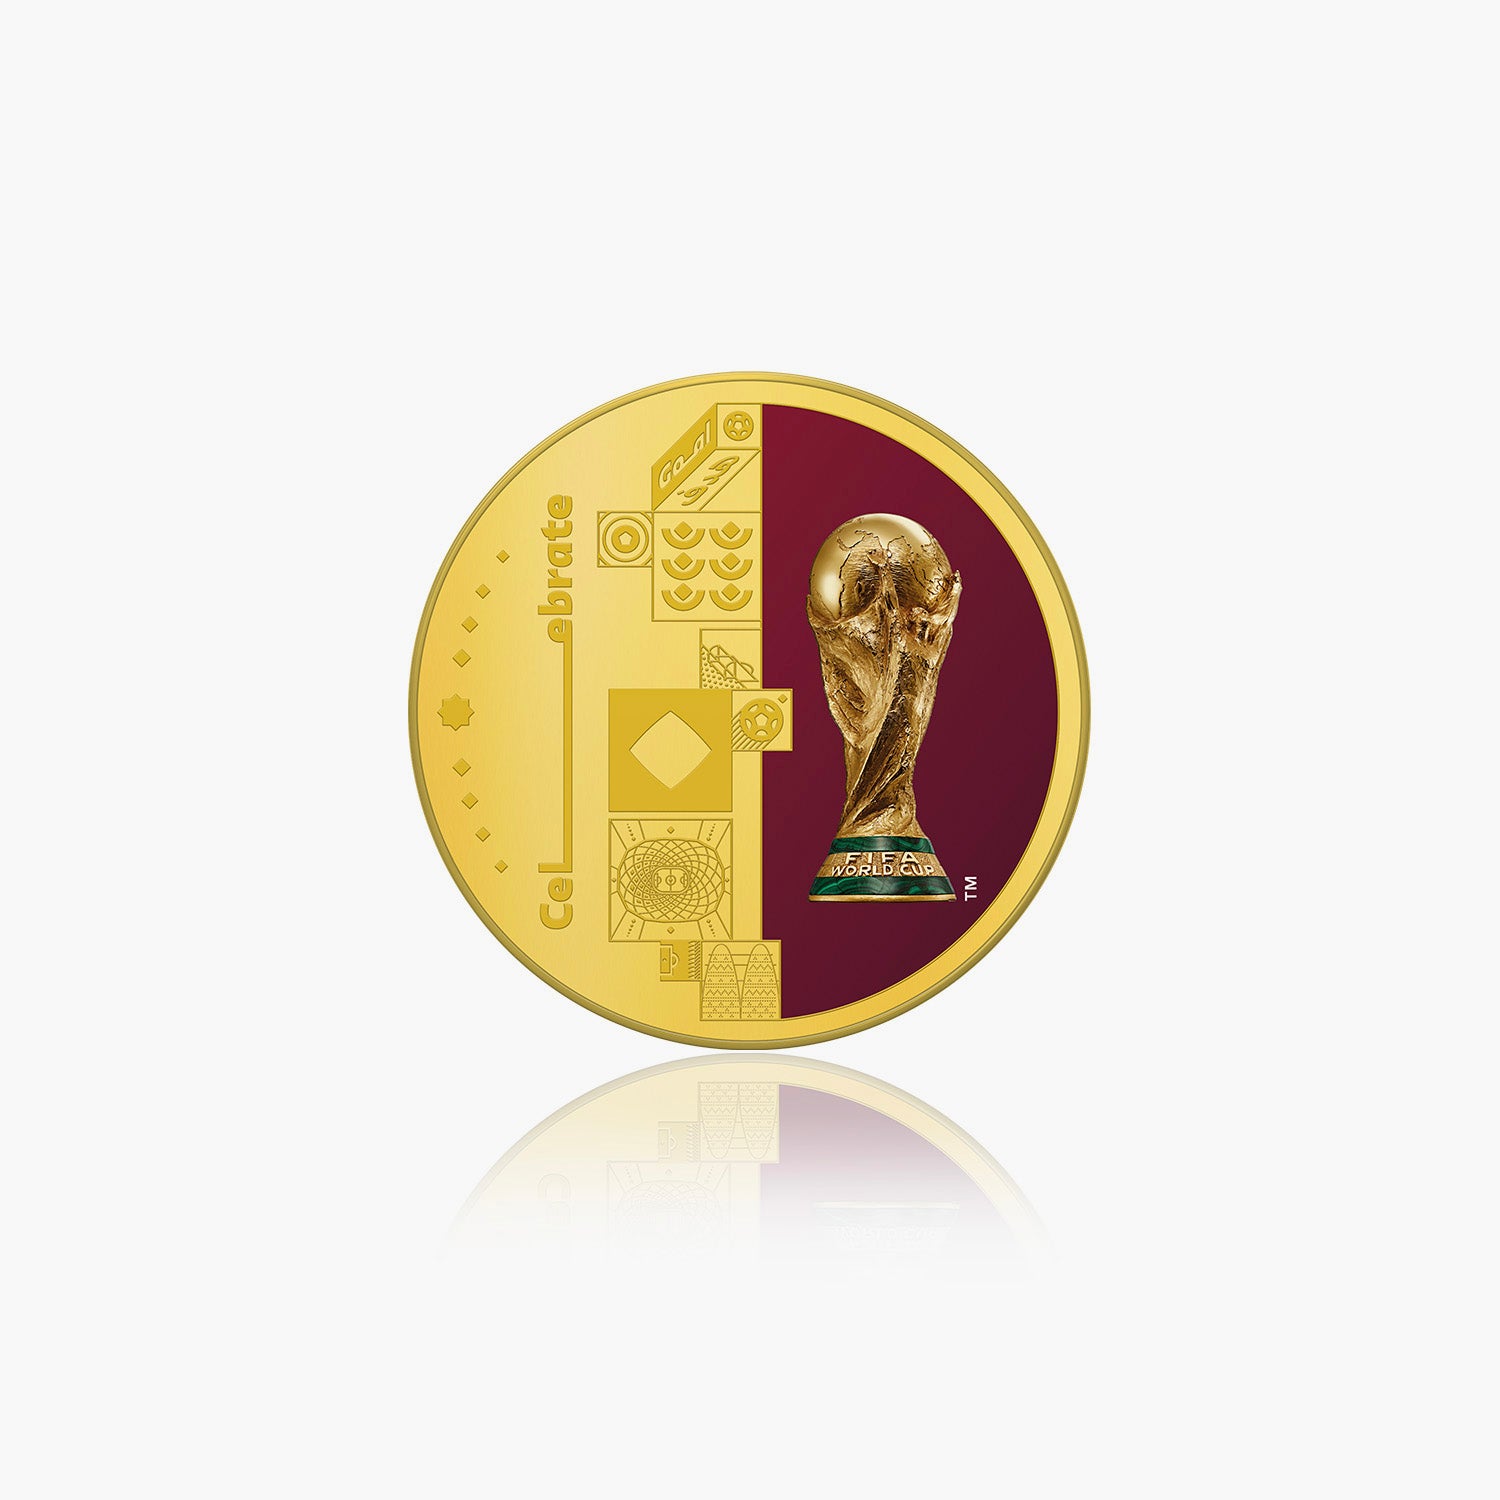 FIFA World Cup Qatar 50mm Commemorative